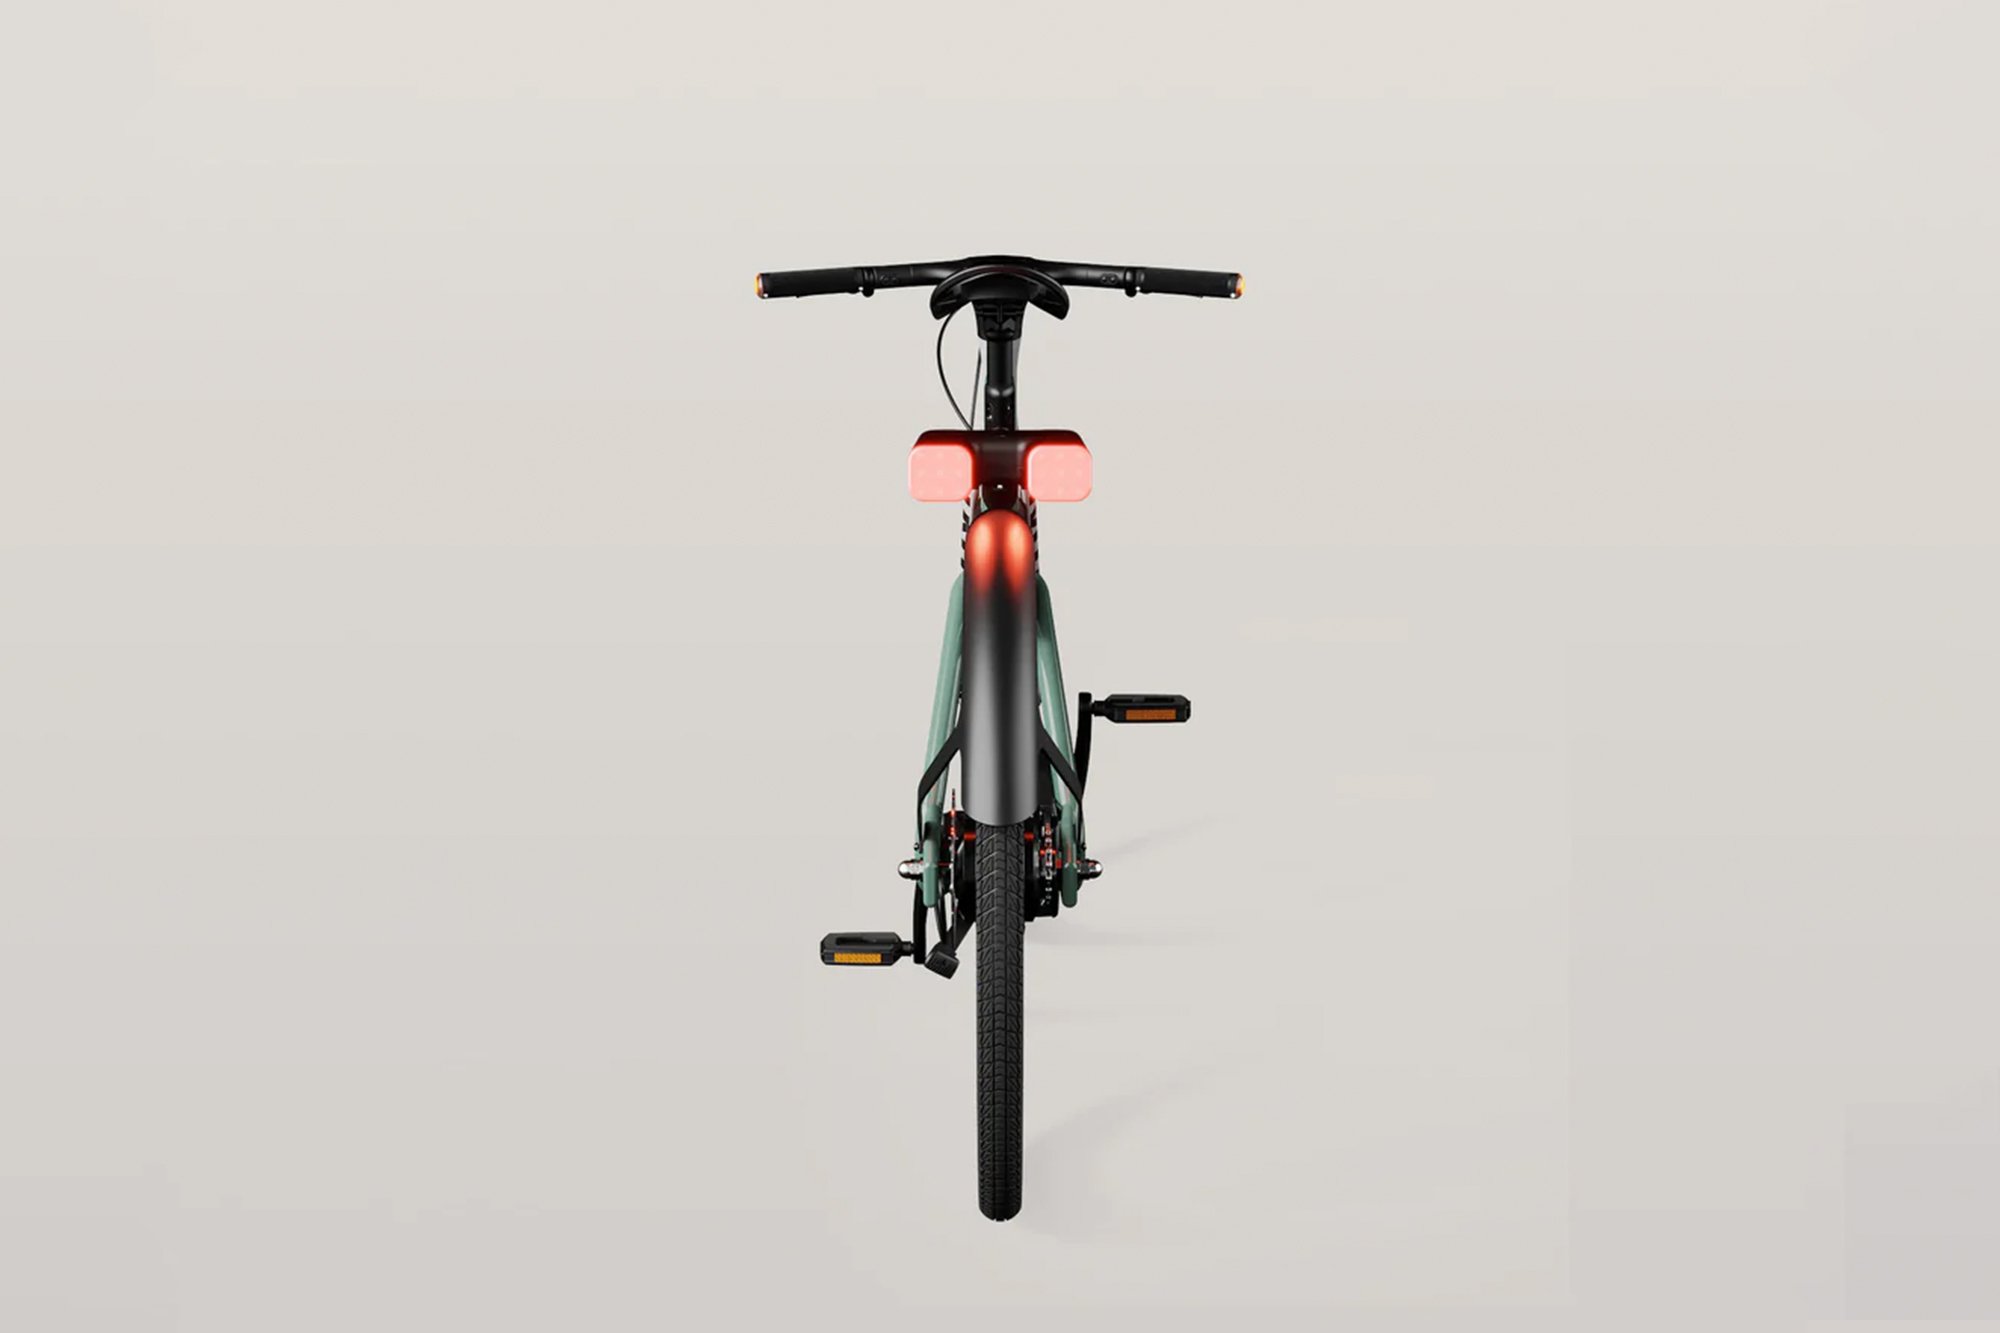 The MINI E-Bike 1 in collaborative design with Angell Mobility